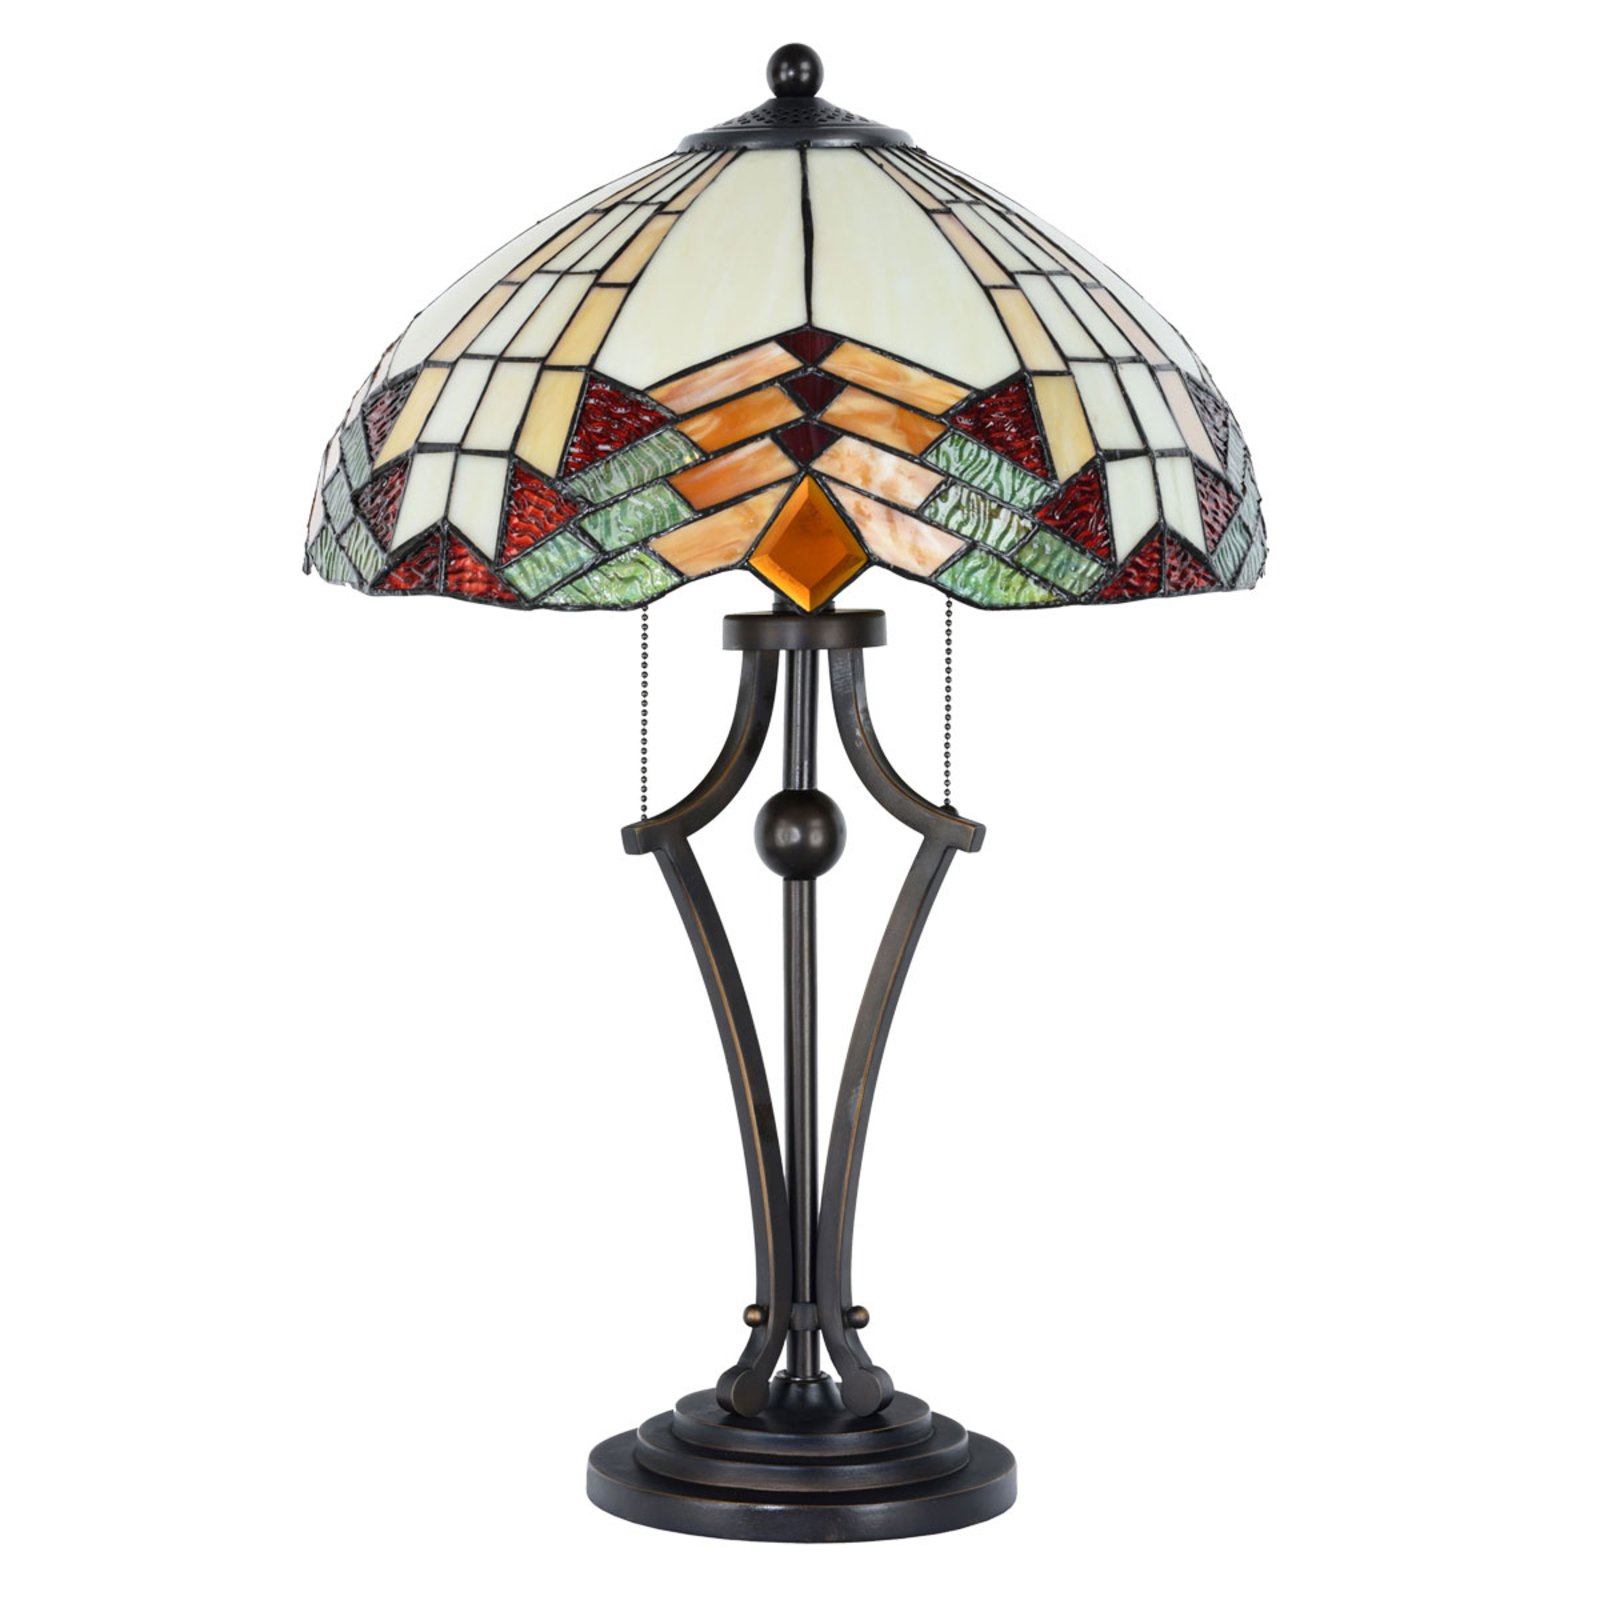 Galda lampa 5961 ar krāsainu stiklu un Tiffany izskatu